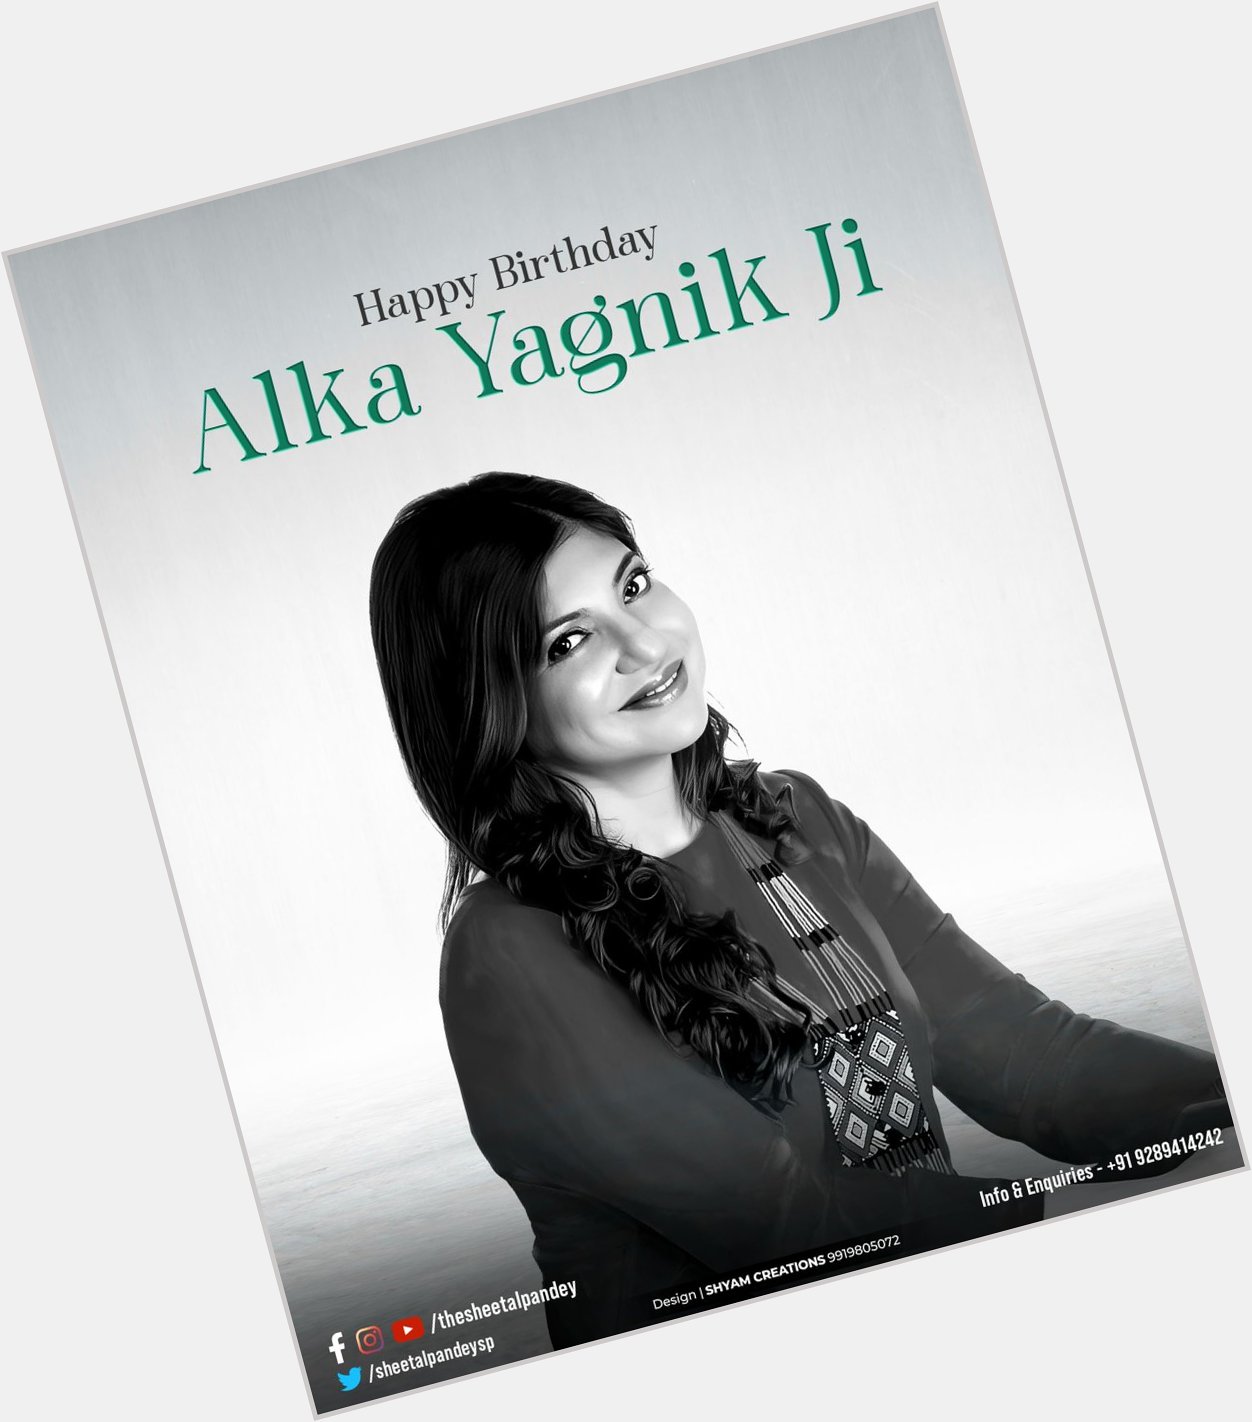 Happy birthday Alka Yagnik ji    